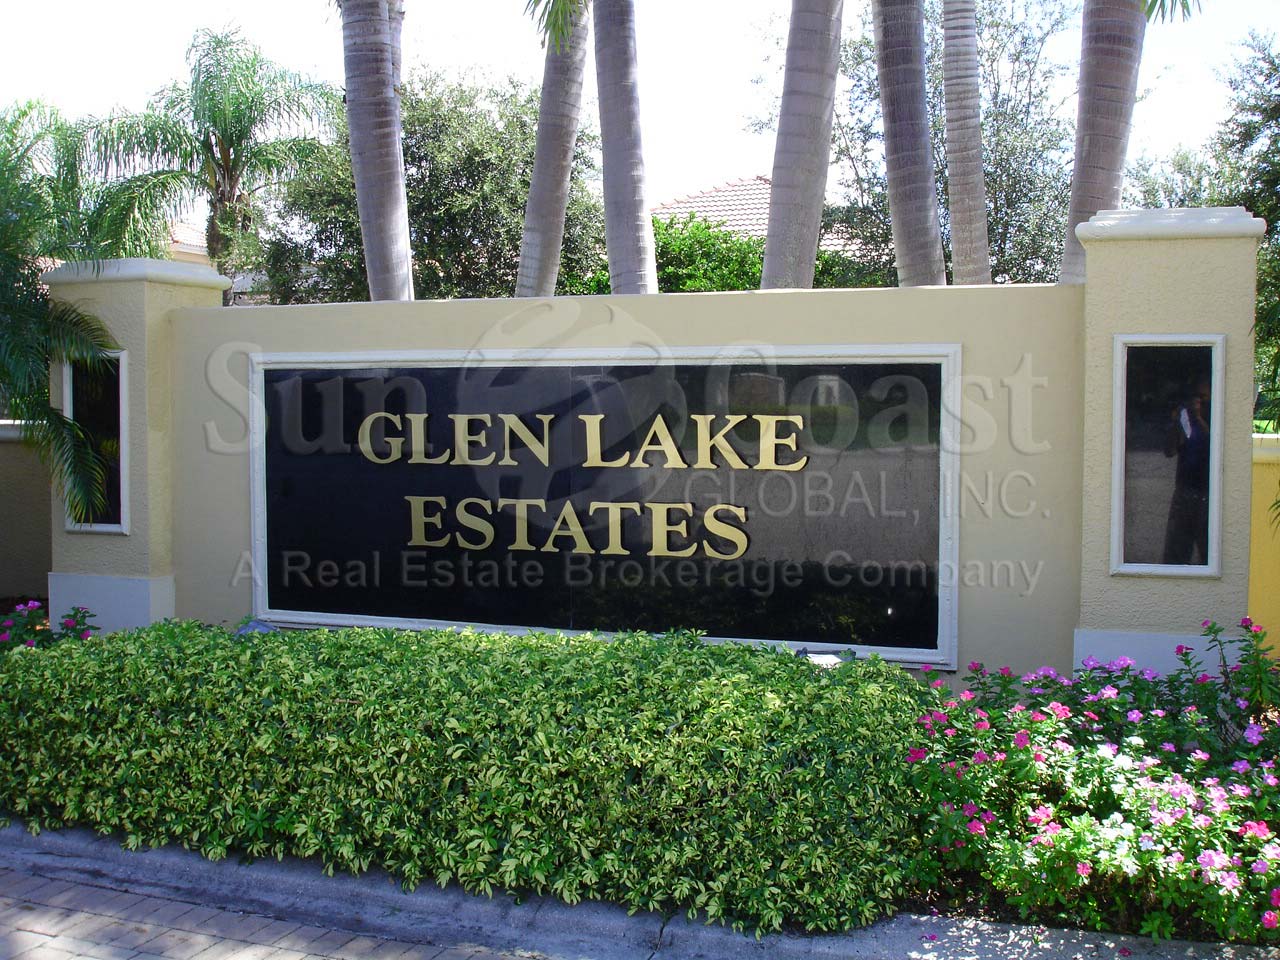 Glen Lake Estates signage